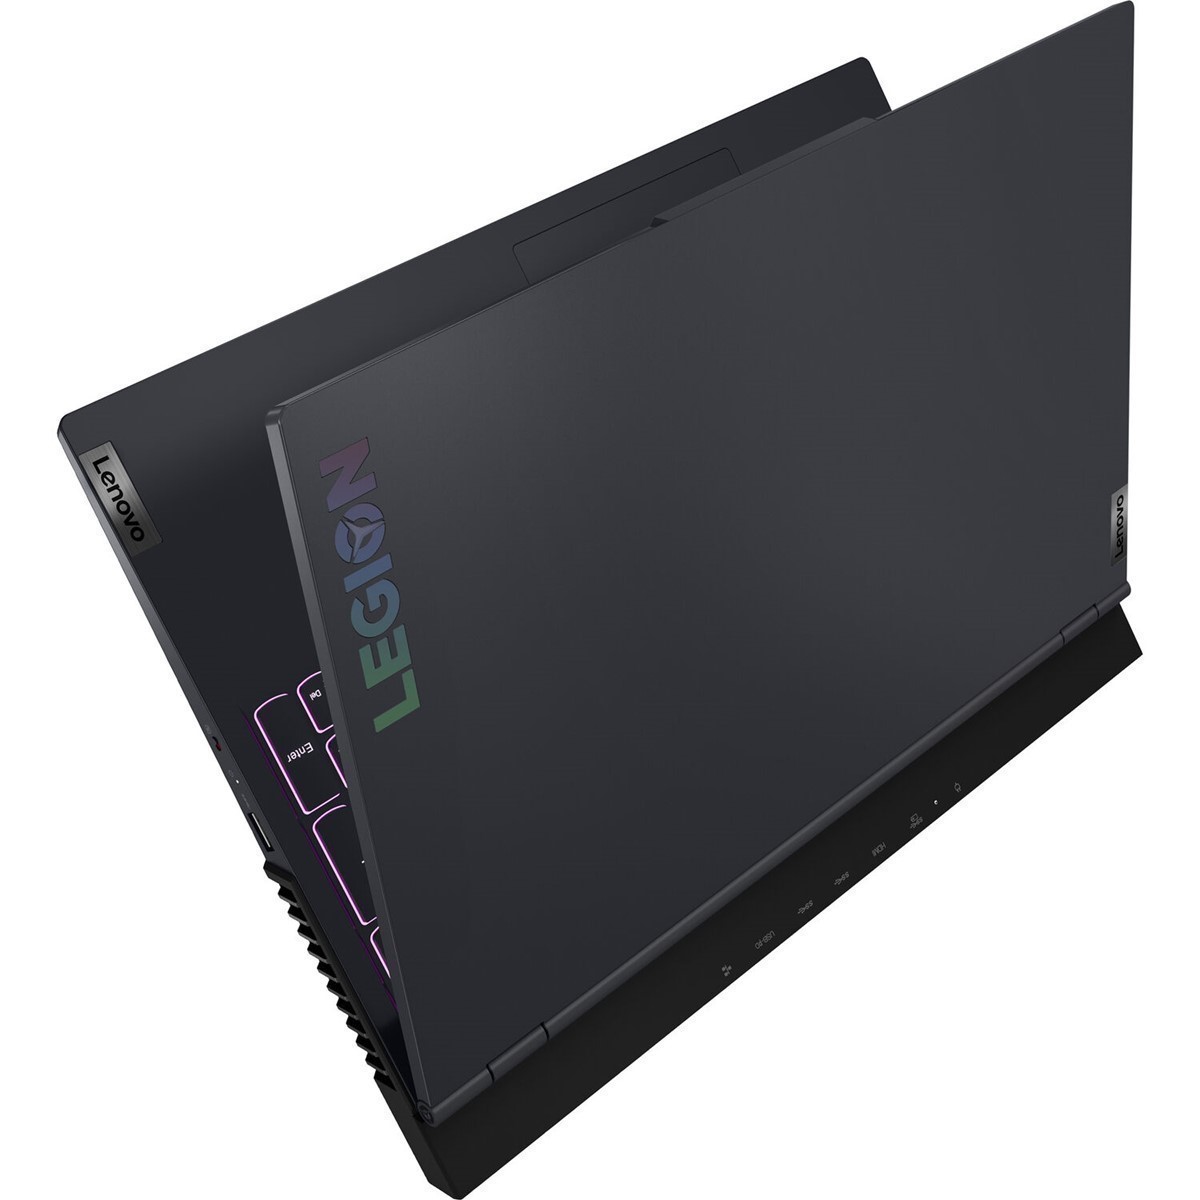 Lenovo R5 5800H-32GB-512 SSD-6GB 3060-FHD 15.6" Laptop